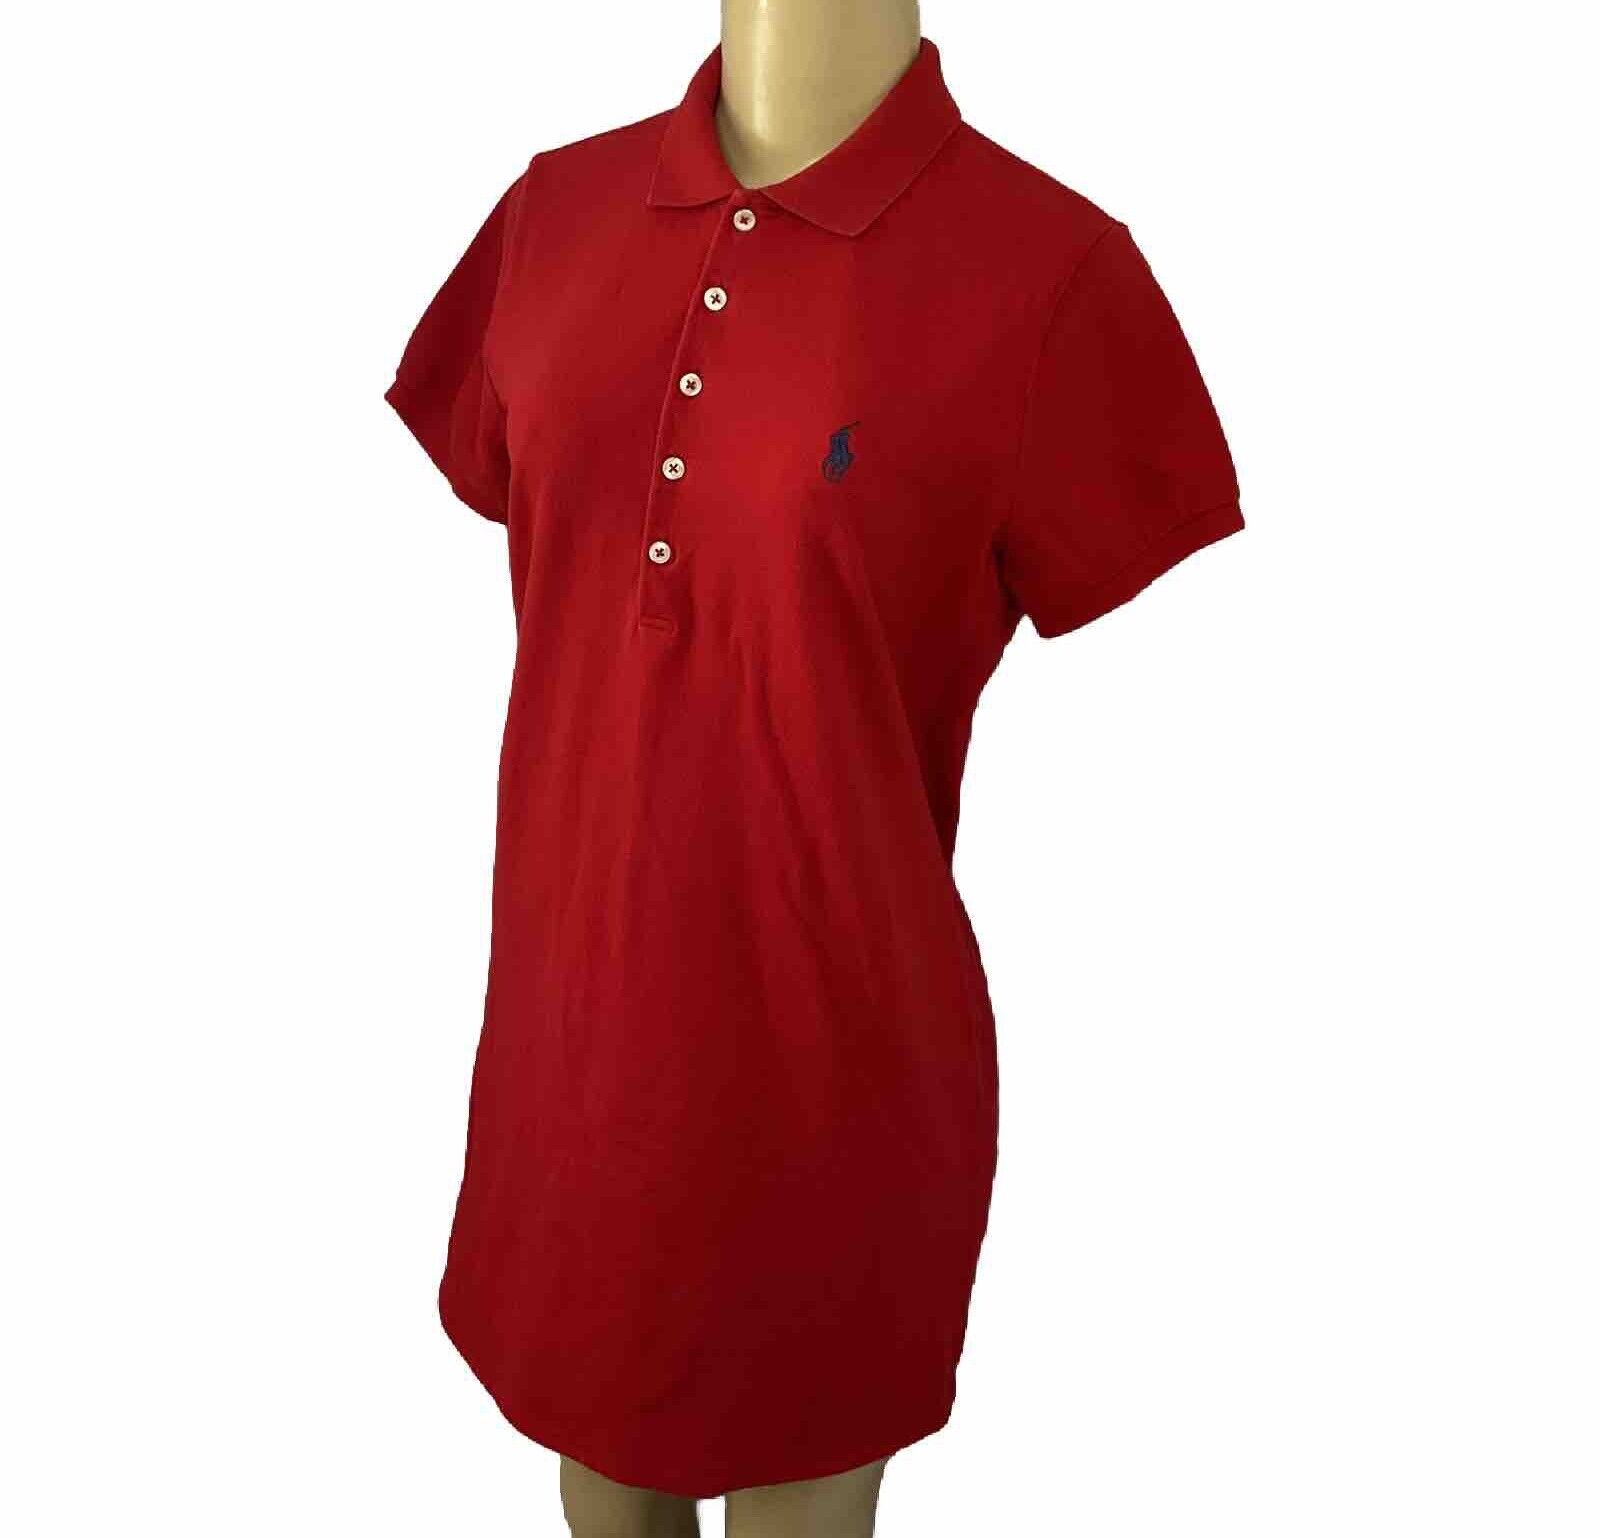 Ralph Lauren Polo Dress Short Sleeve Knit Pique Solid Red Women Sz L Blue Pony